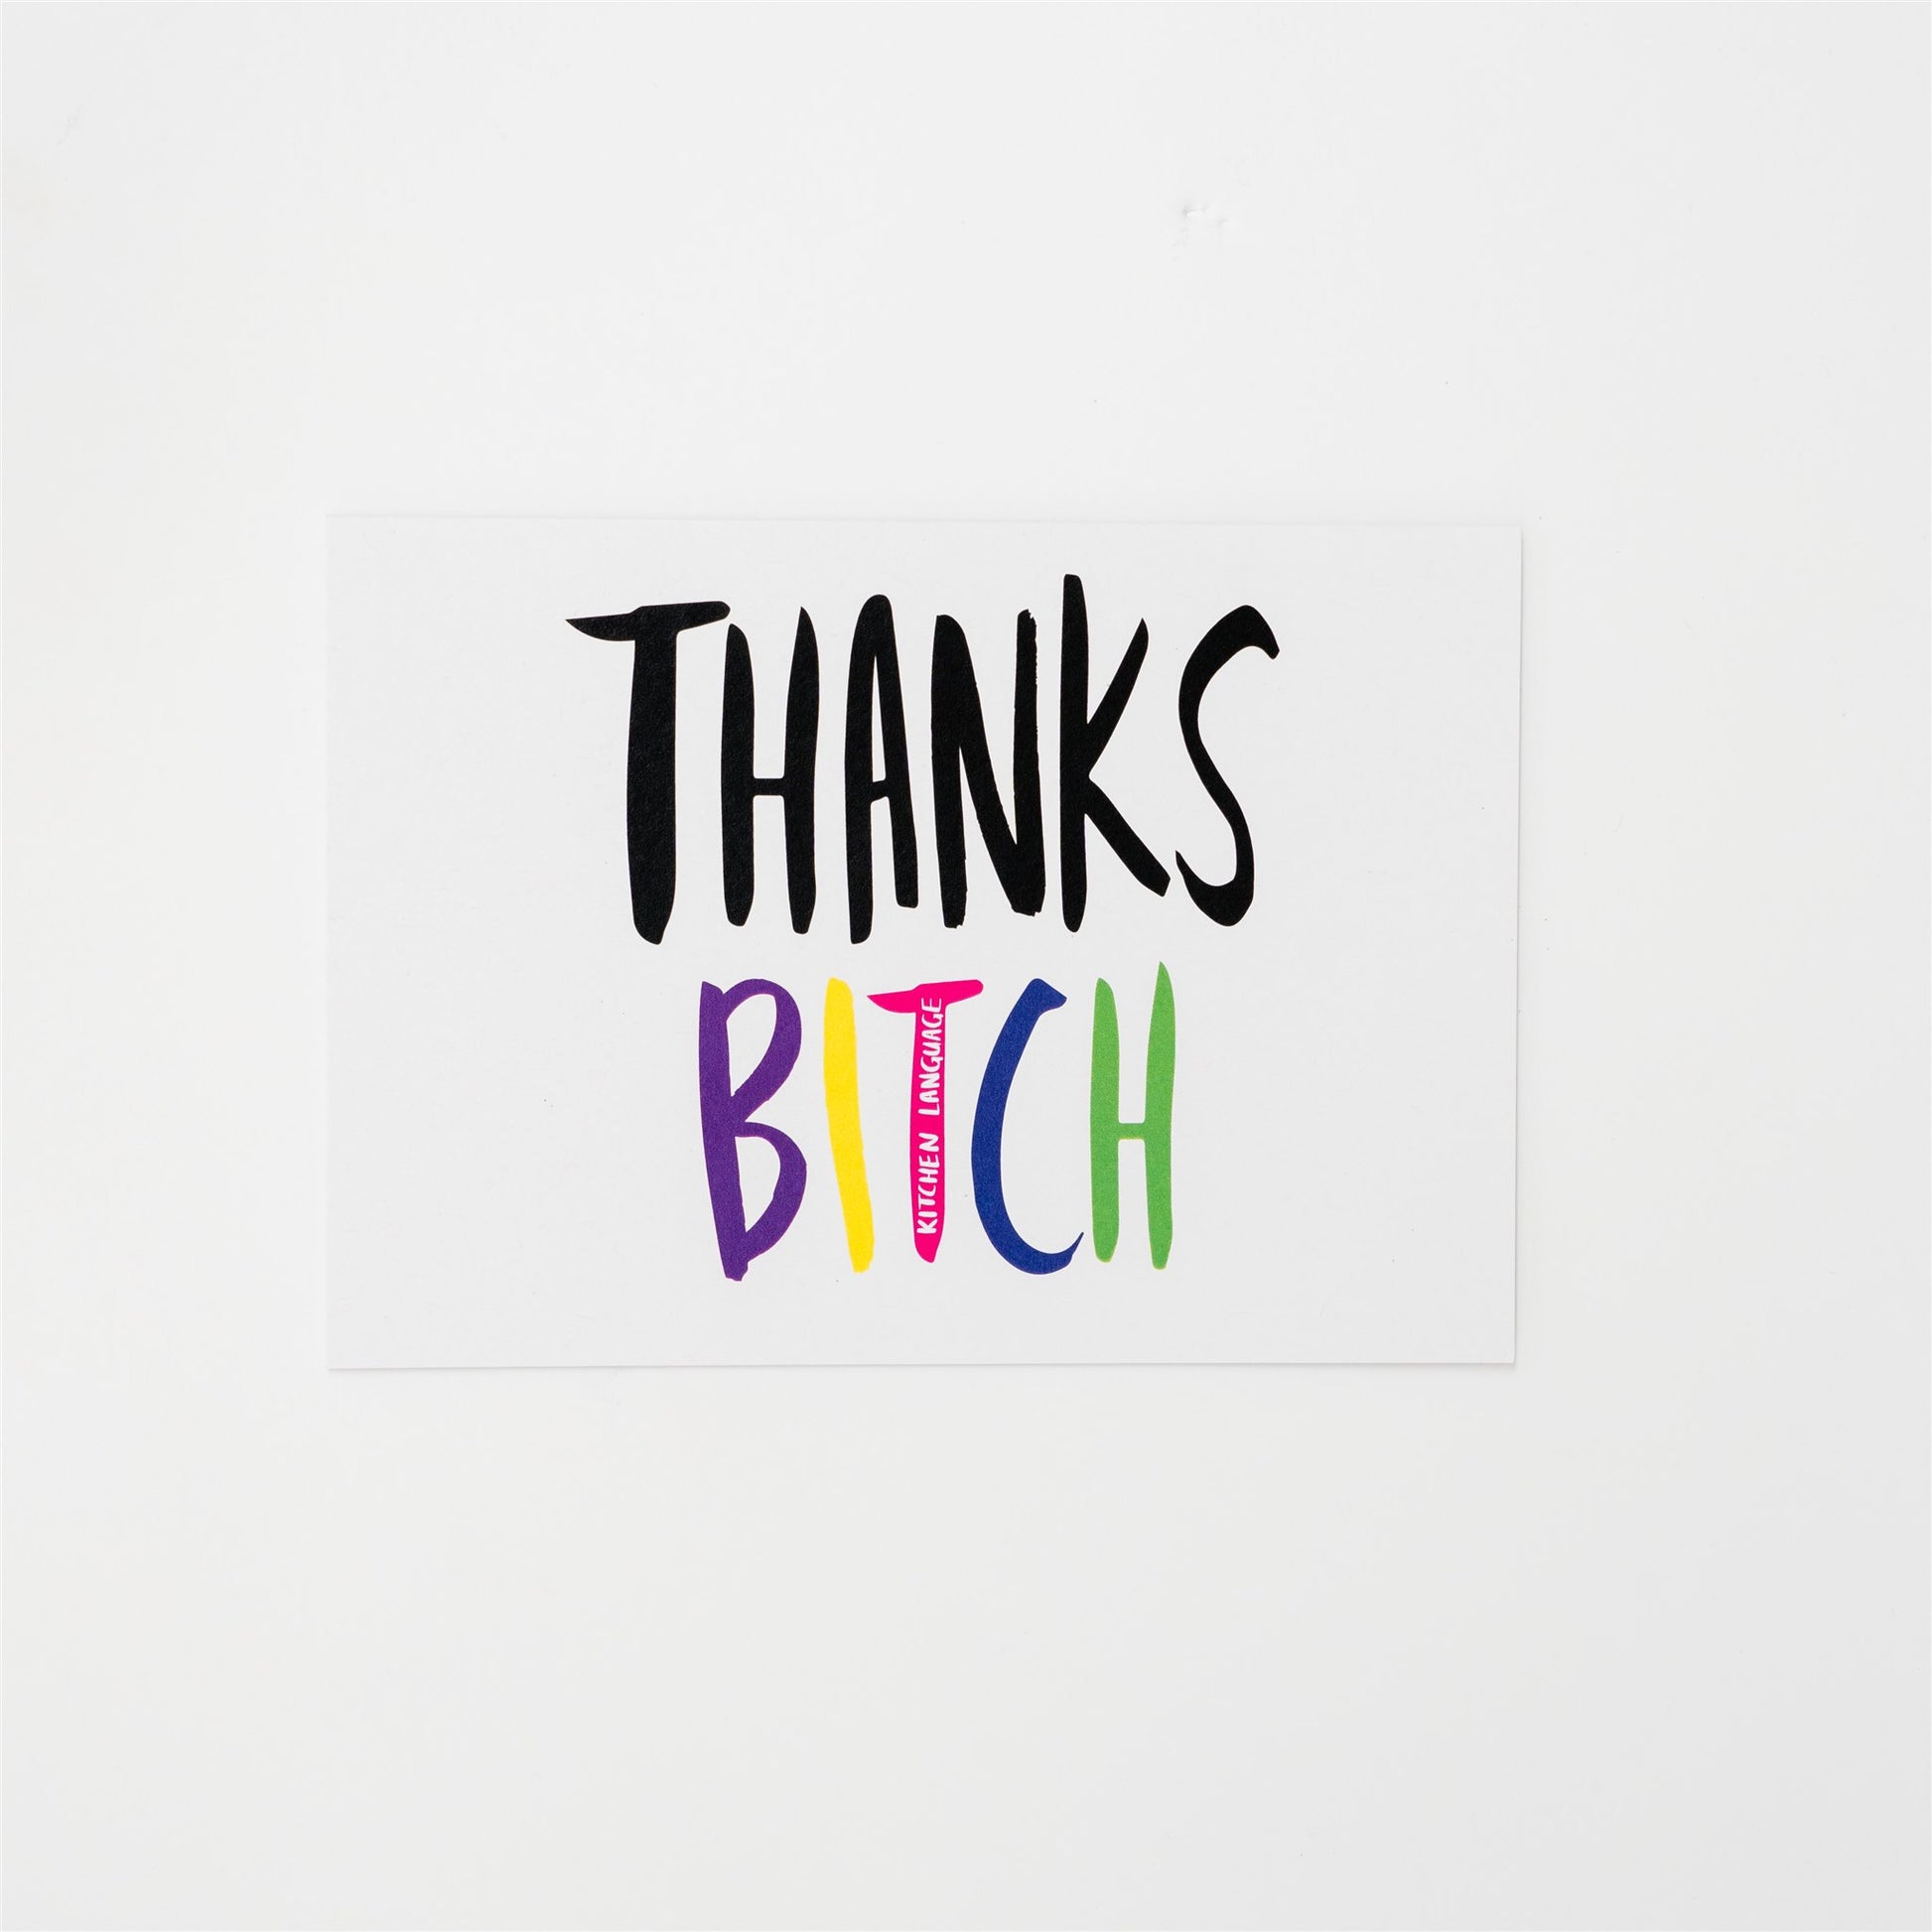 Thanks Bitch- greeting card- kitchen language